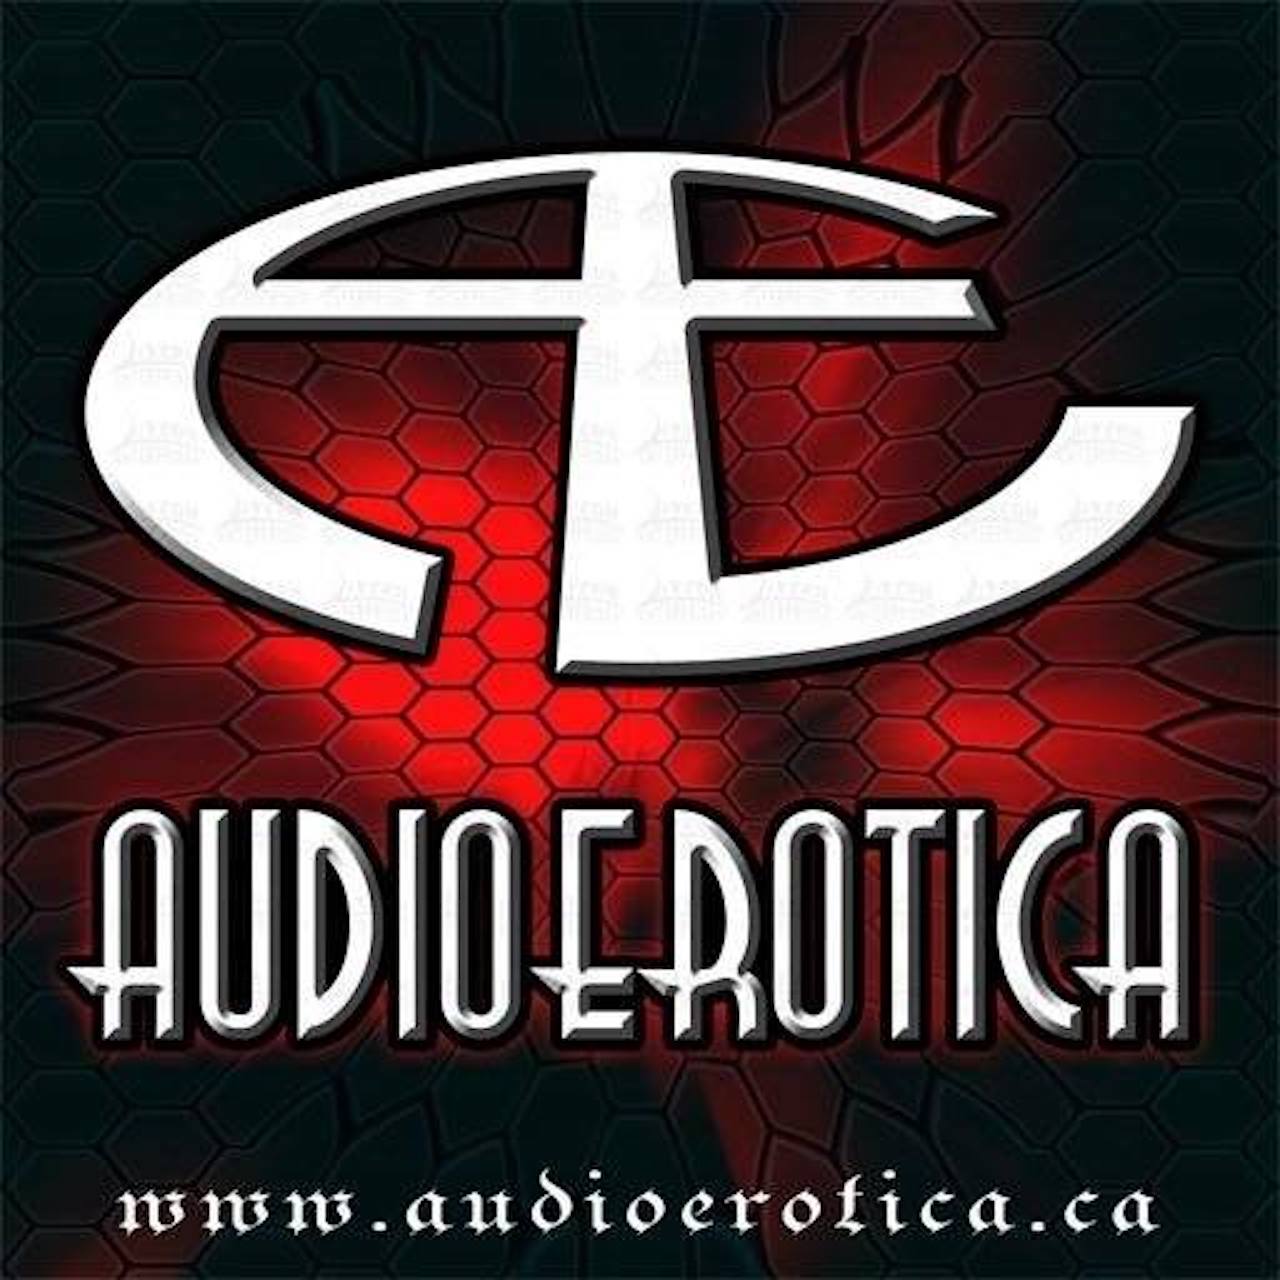 AUDIOEORITCA – Audioerotica